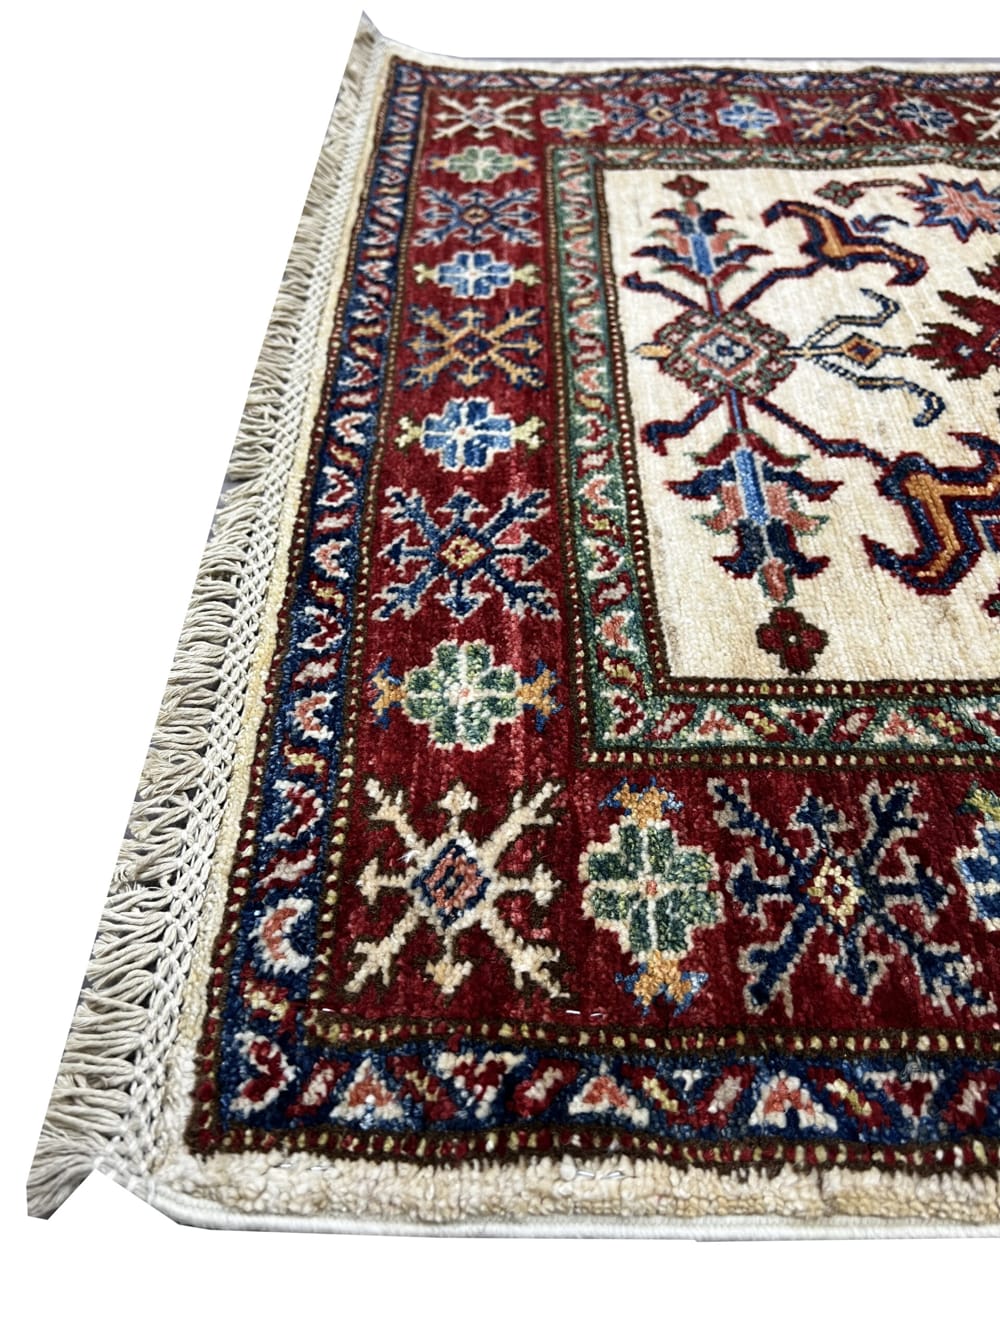 Rug# 26487. Afghan Chechen weave hall runner, circa 2010, 19th century Kazak inspired, HSW & Veg dyes, size 295x80 cm (5)